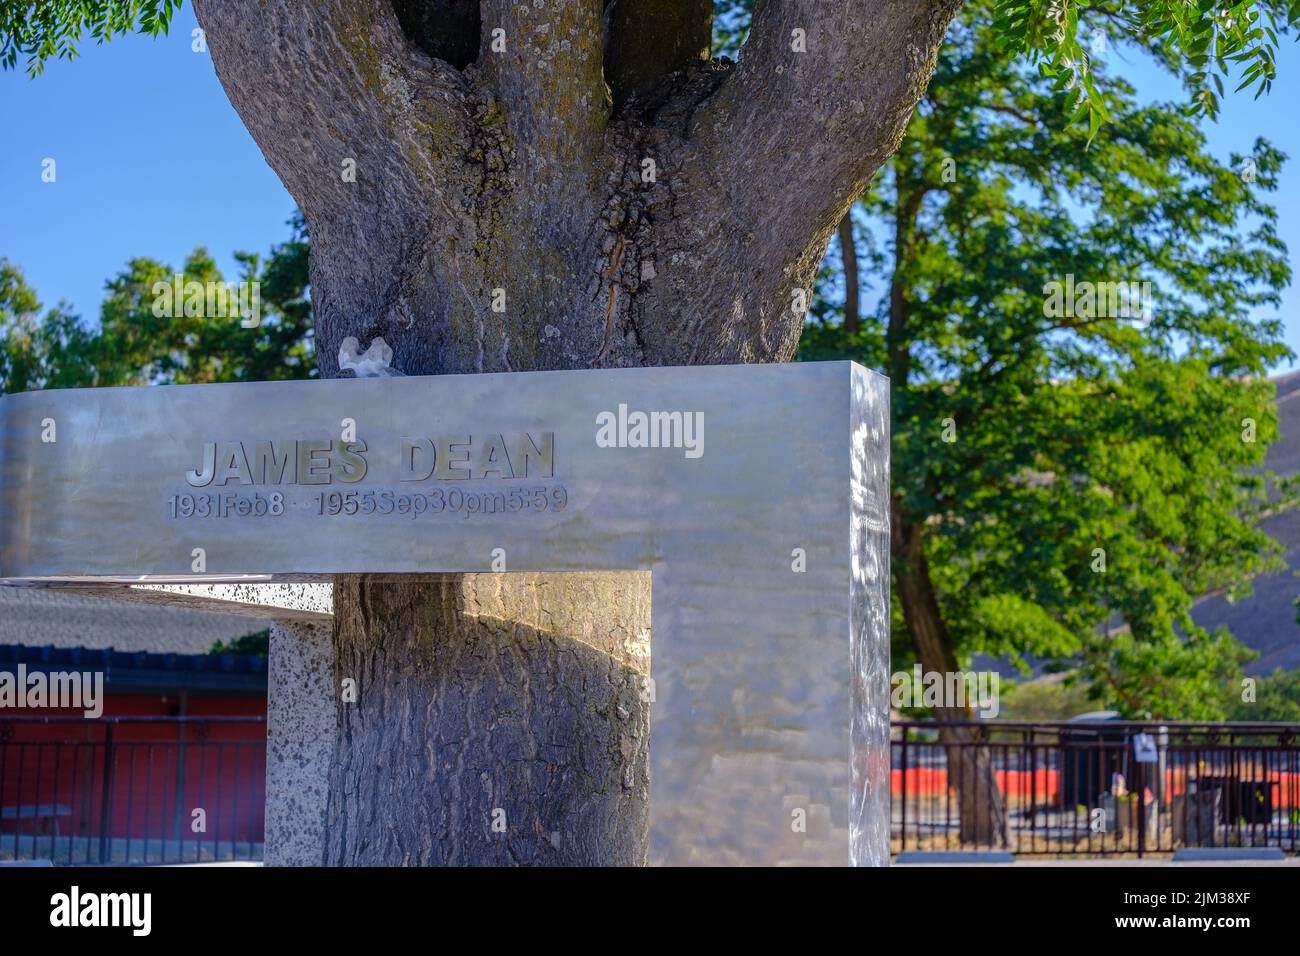 Memorial sculpture for James Dean at Jack Ranch Café, Cholame, Central California, near where he was killed in a car crash. Stock Photo